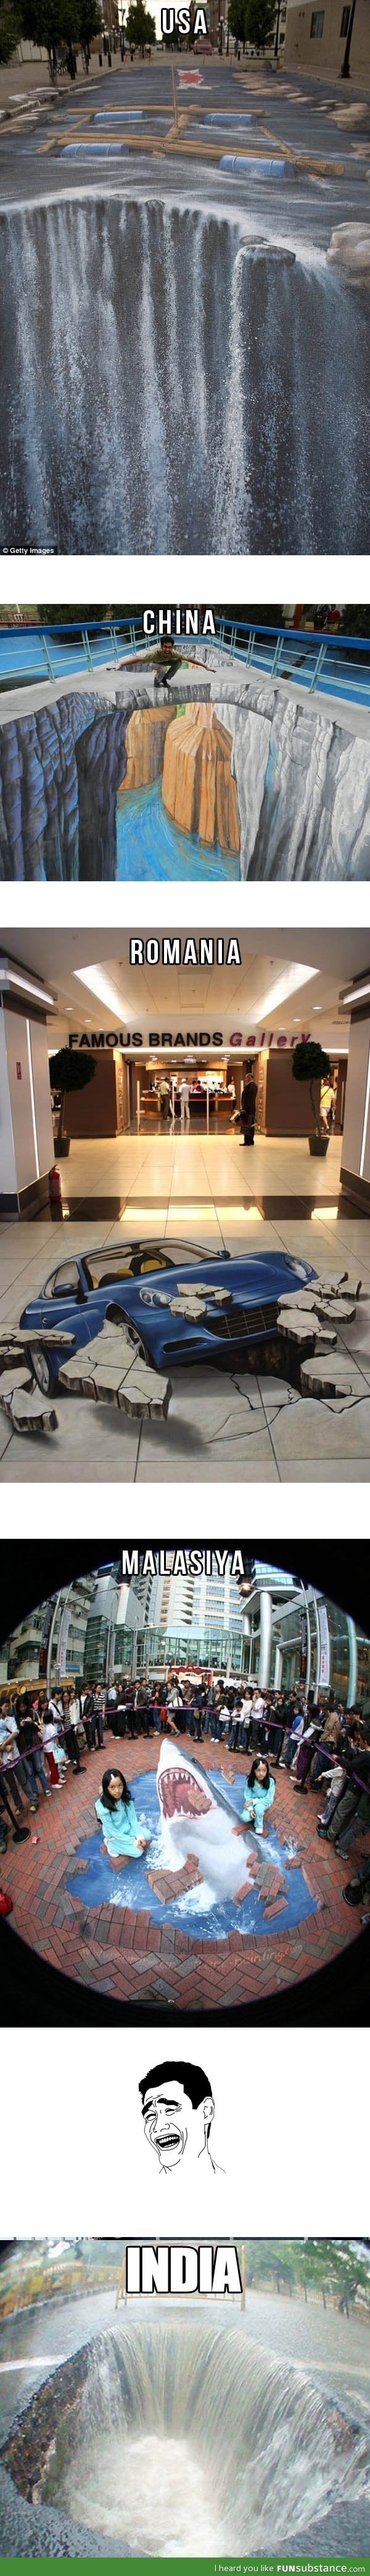 Amazing 3D street art!